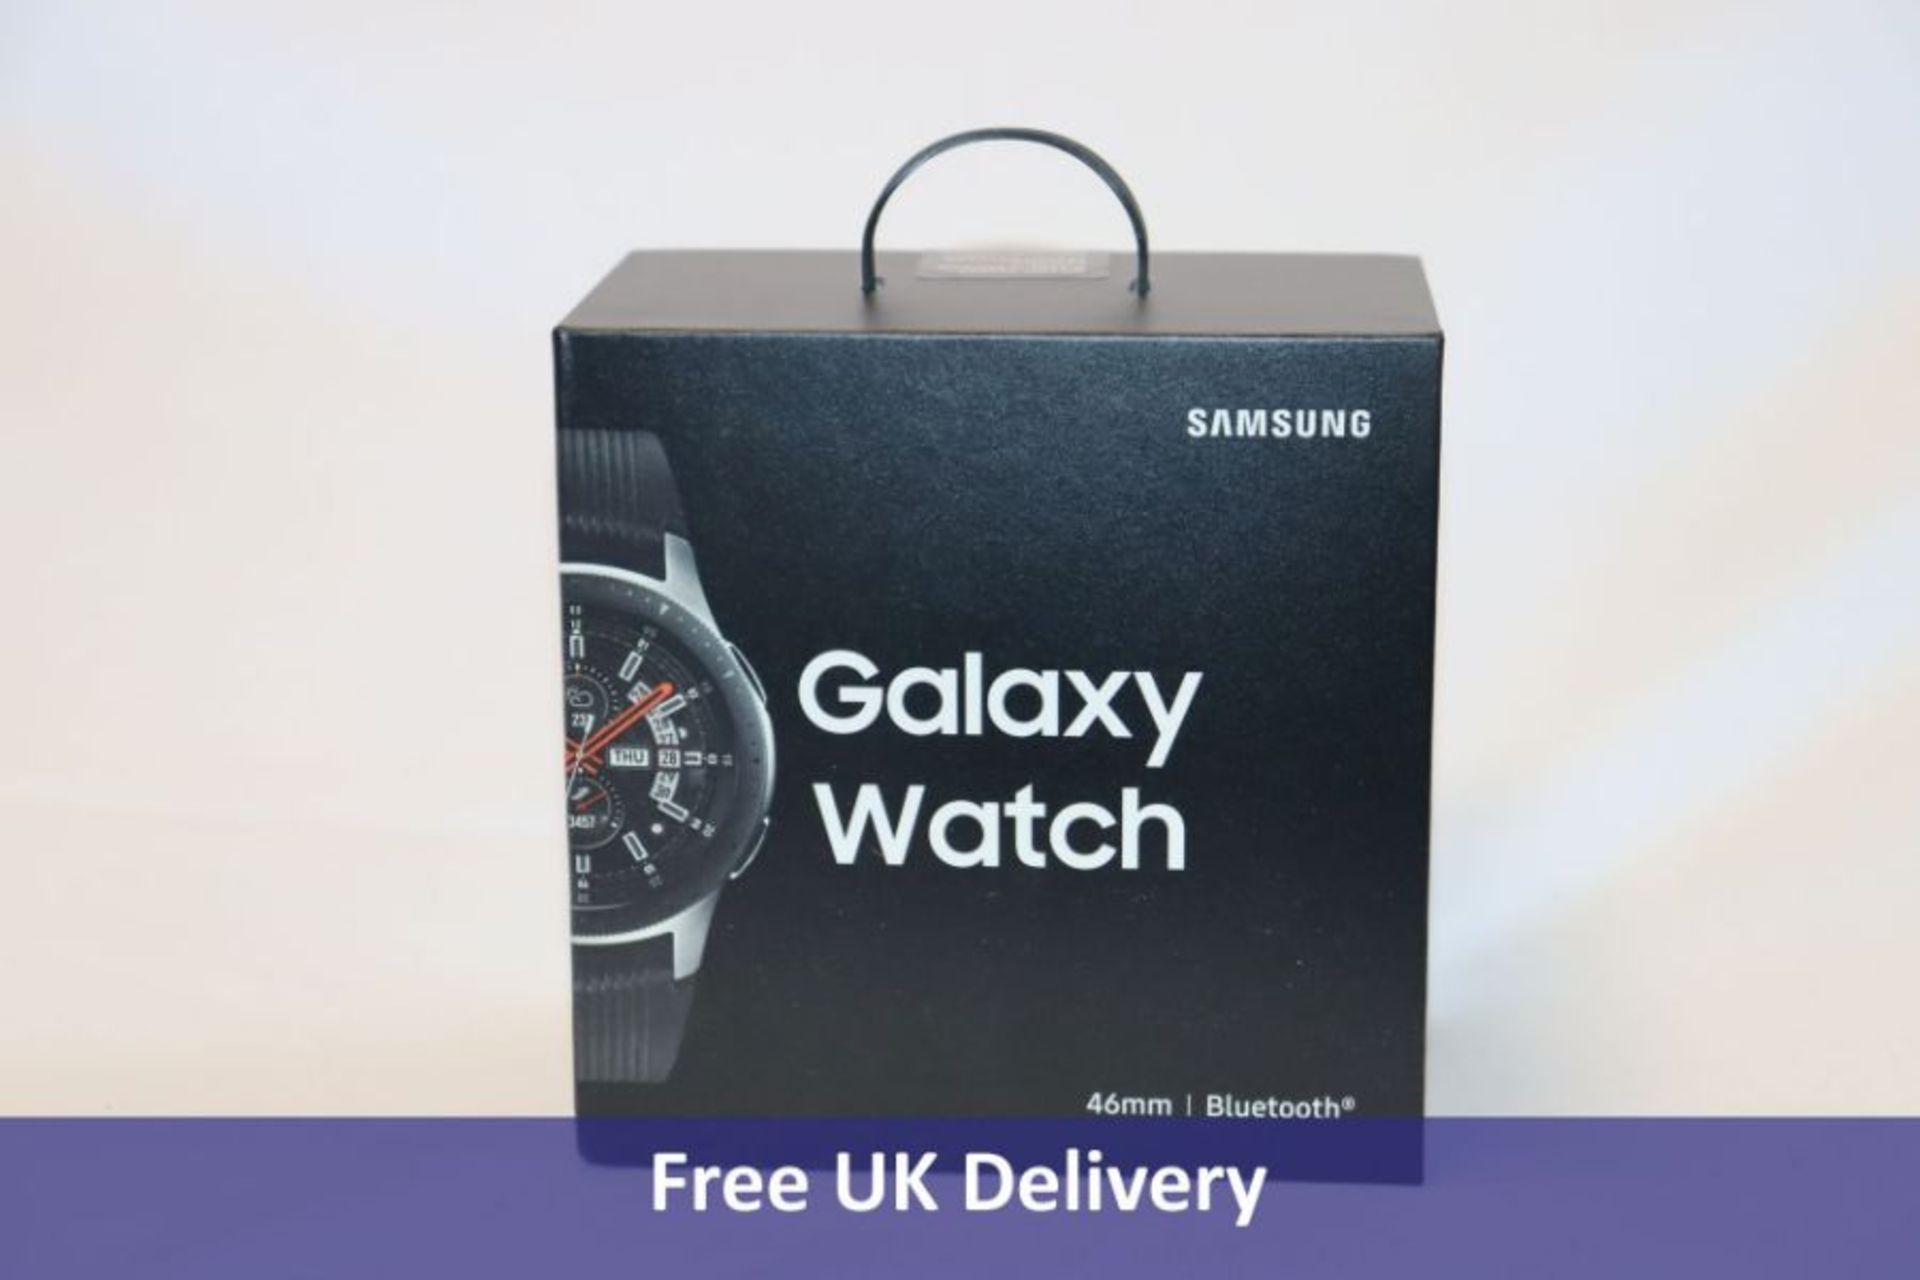 Samsung Galaxy Watch 46mm SM-R800 Bluetooth Smartwatch, Black